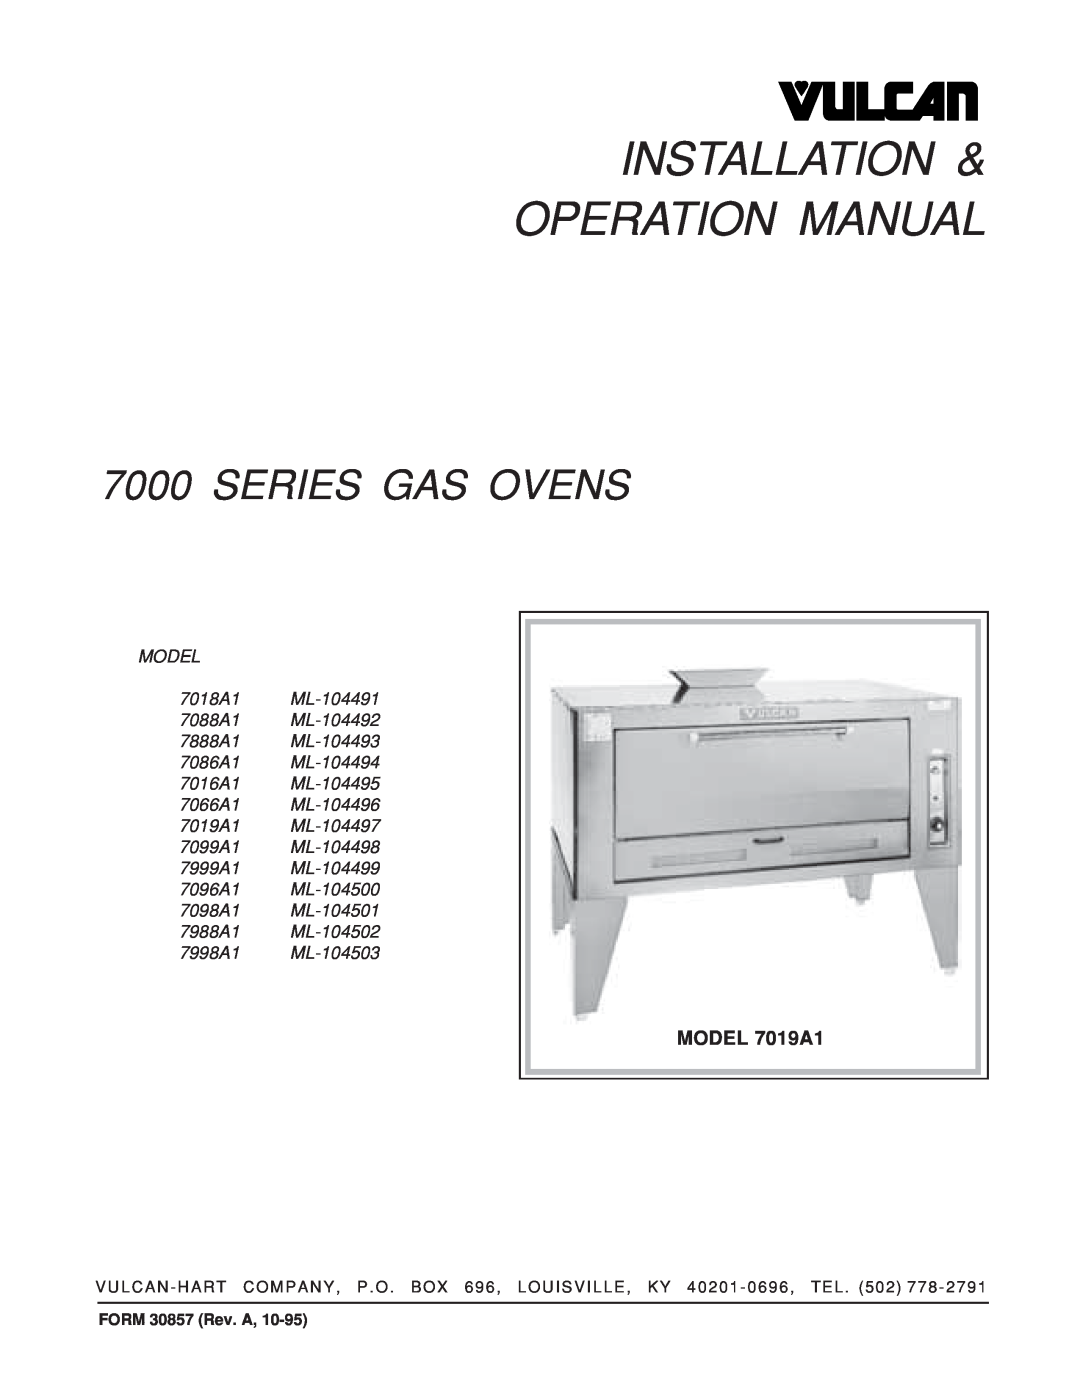 Vulcan-Hart 7019A1 ML-104497 operation manual Series Gas Ovens, MODEL 7019A1, 7988A1 ML-104502 7998A1 ML-104503 